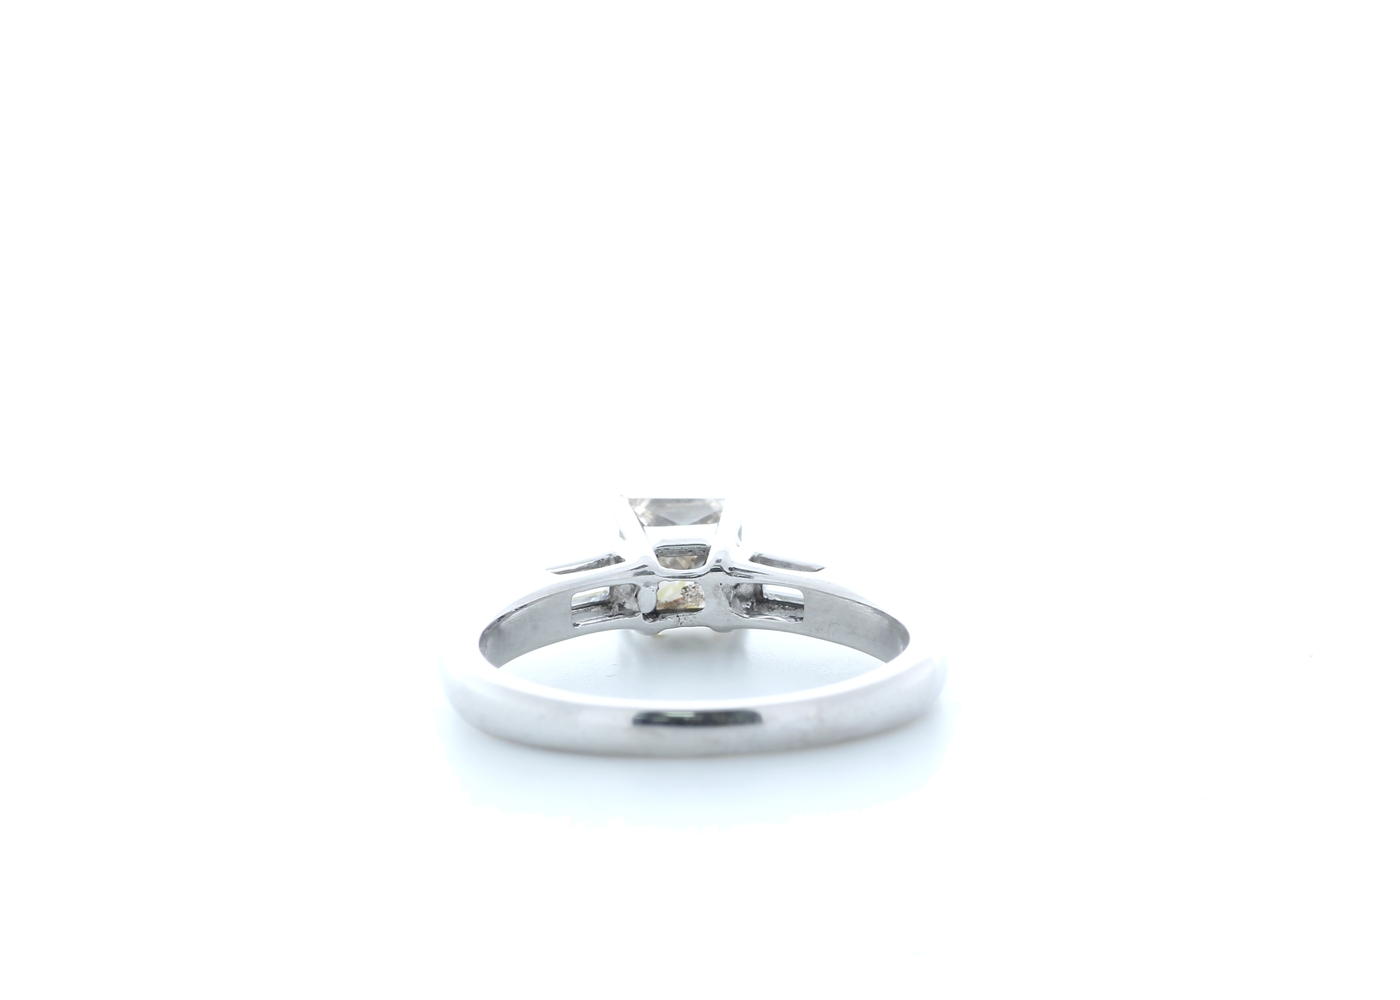 18ct White Gold Princess Cut Diamond Ring 1.20 (1.01) Carats - Image 3 of 5